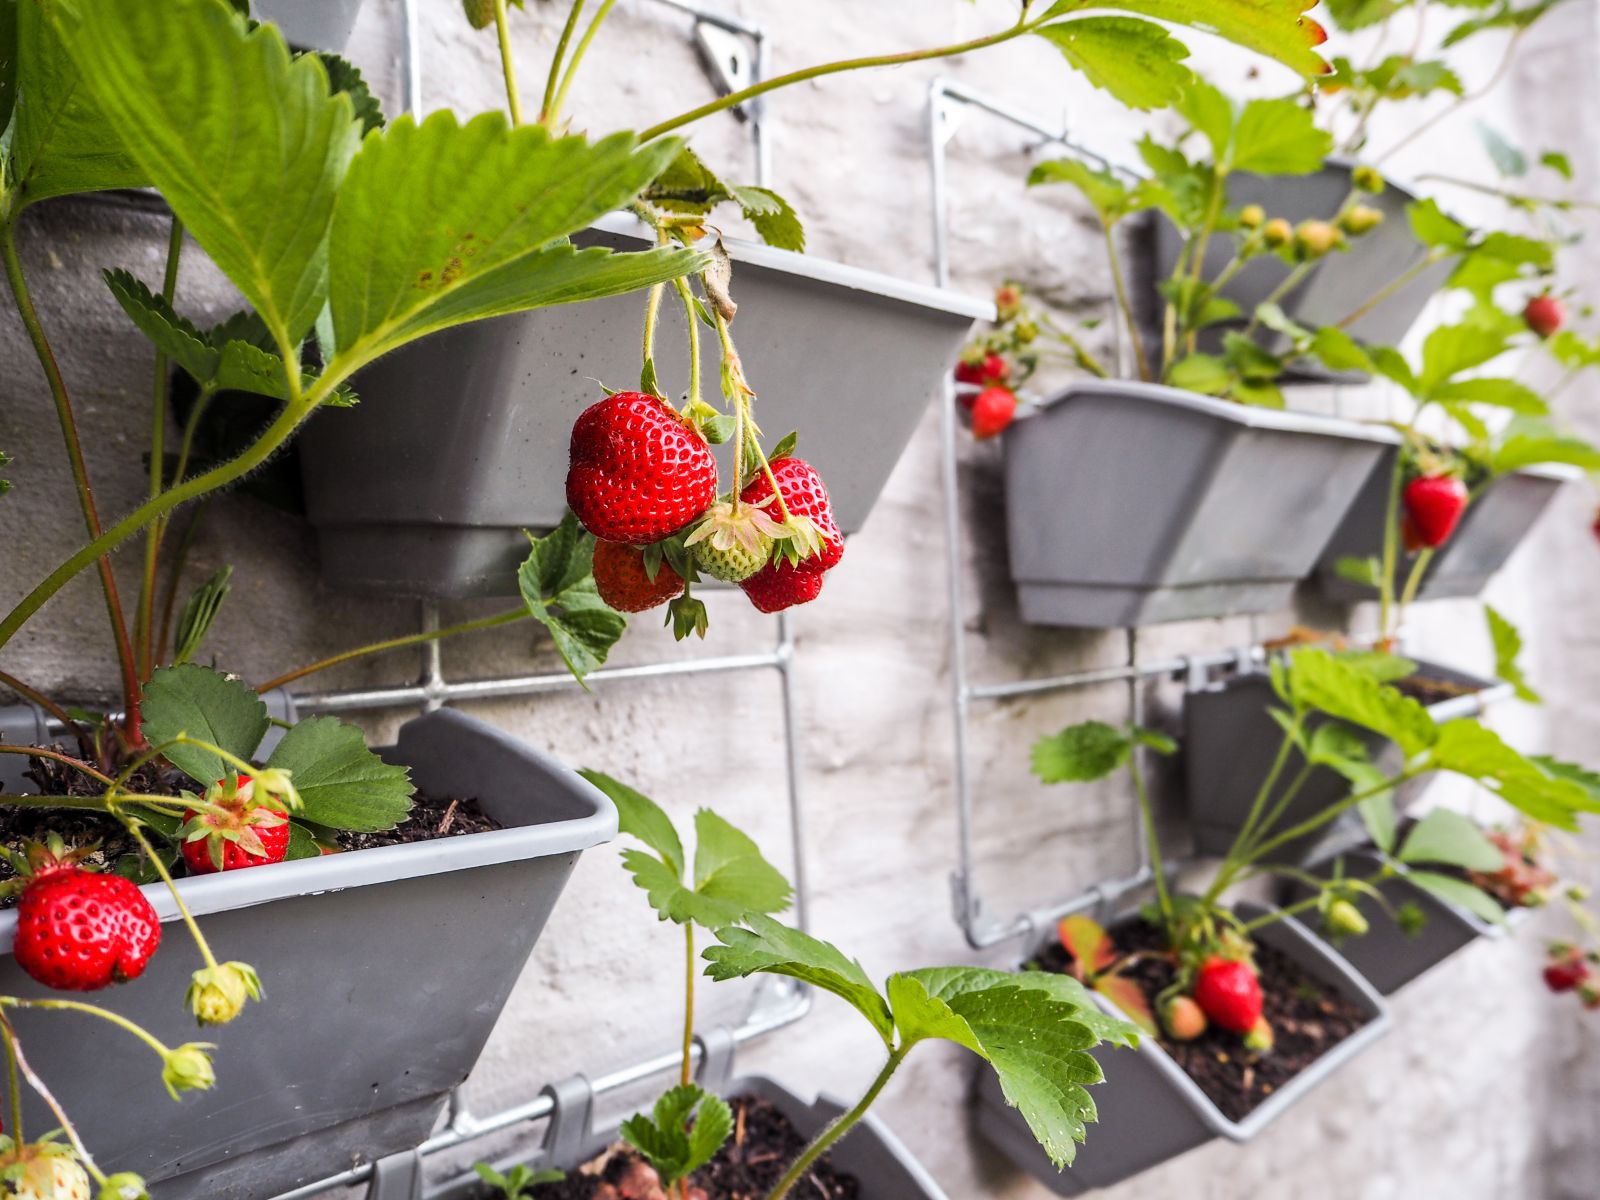 Vertical garden with strawberries